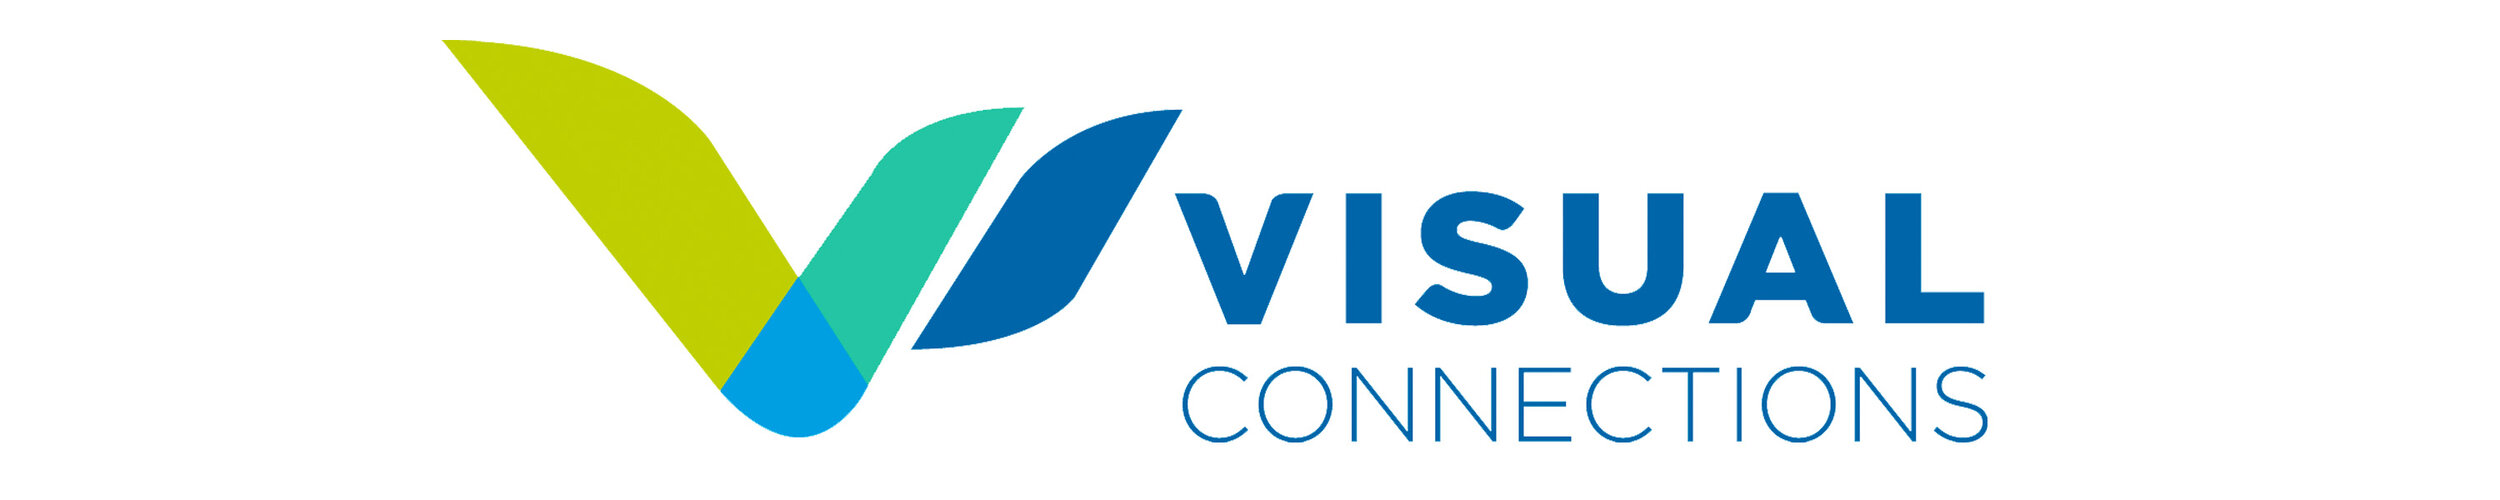 visual connections logo.jpg